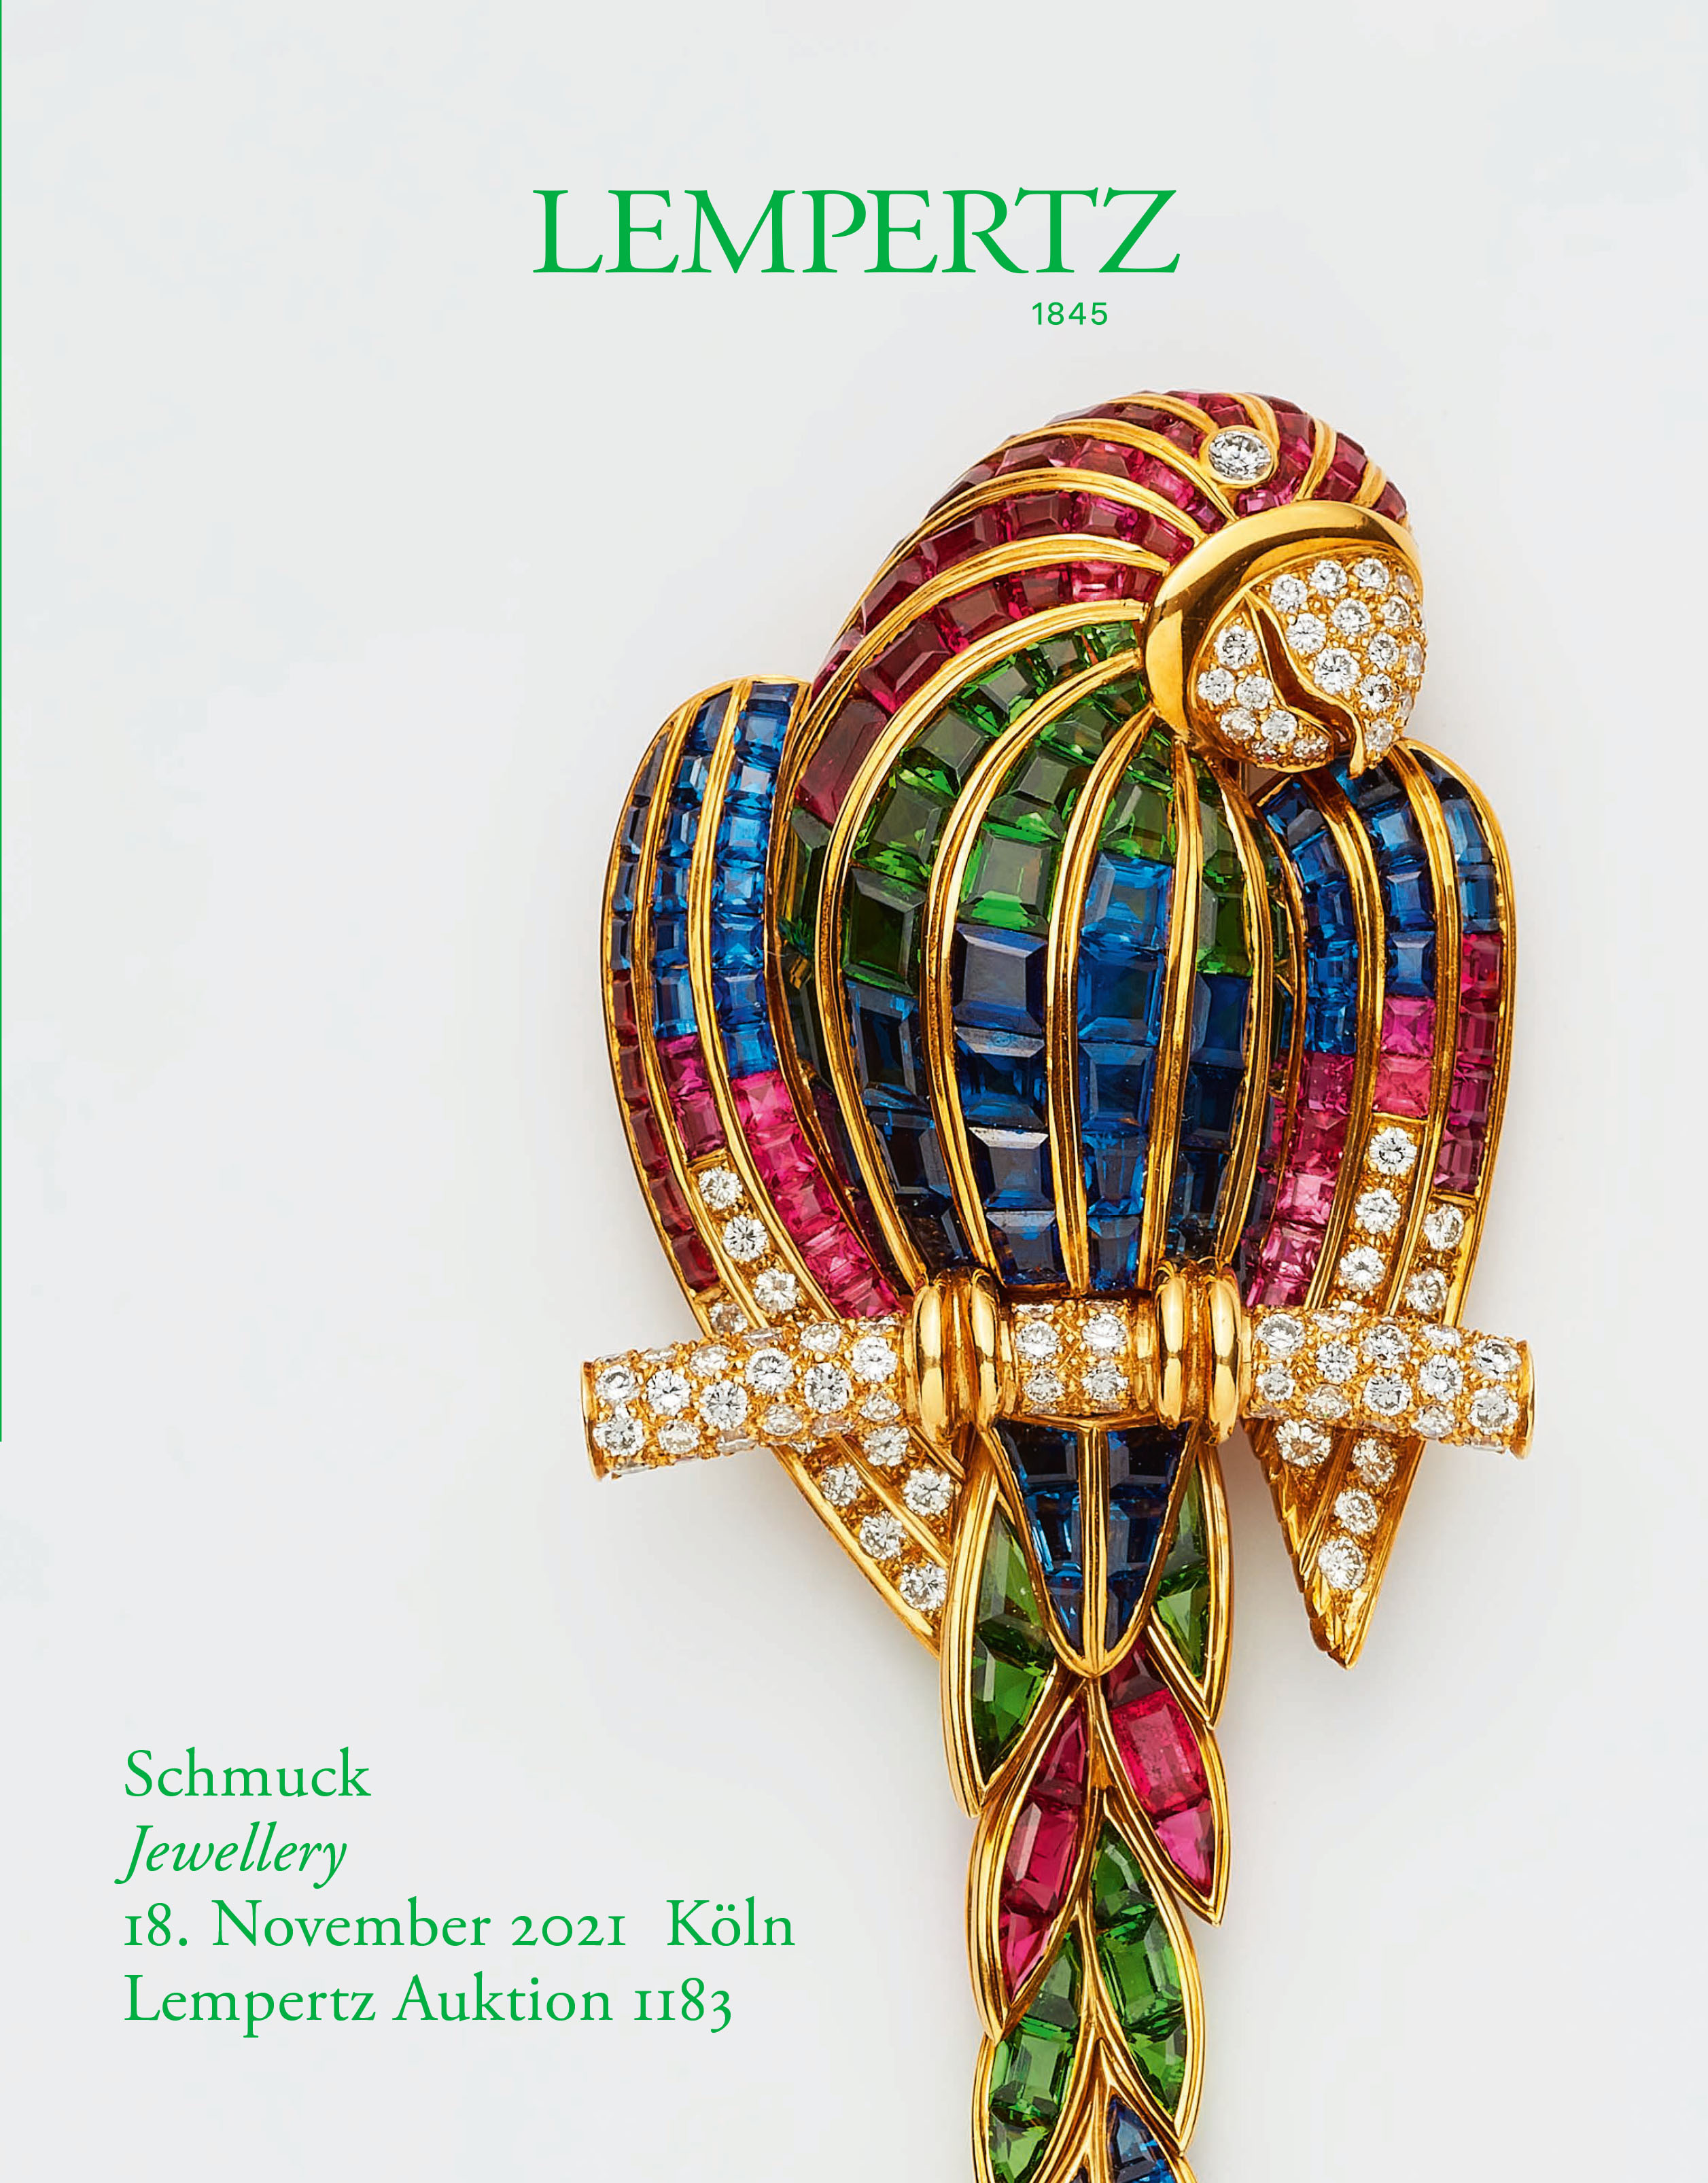 Catalogue - Jewellery - Online Catalogue - Auction 1183 – Purchase valuable works of art at the next Lempertz-Auction!